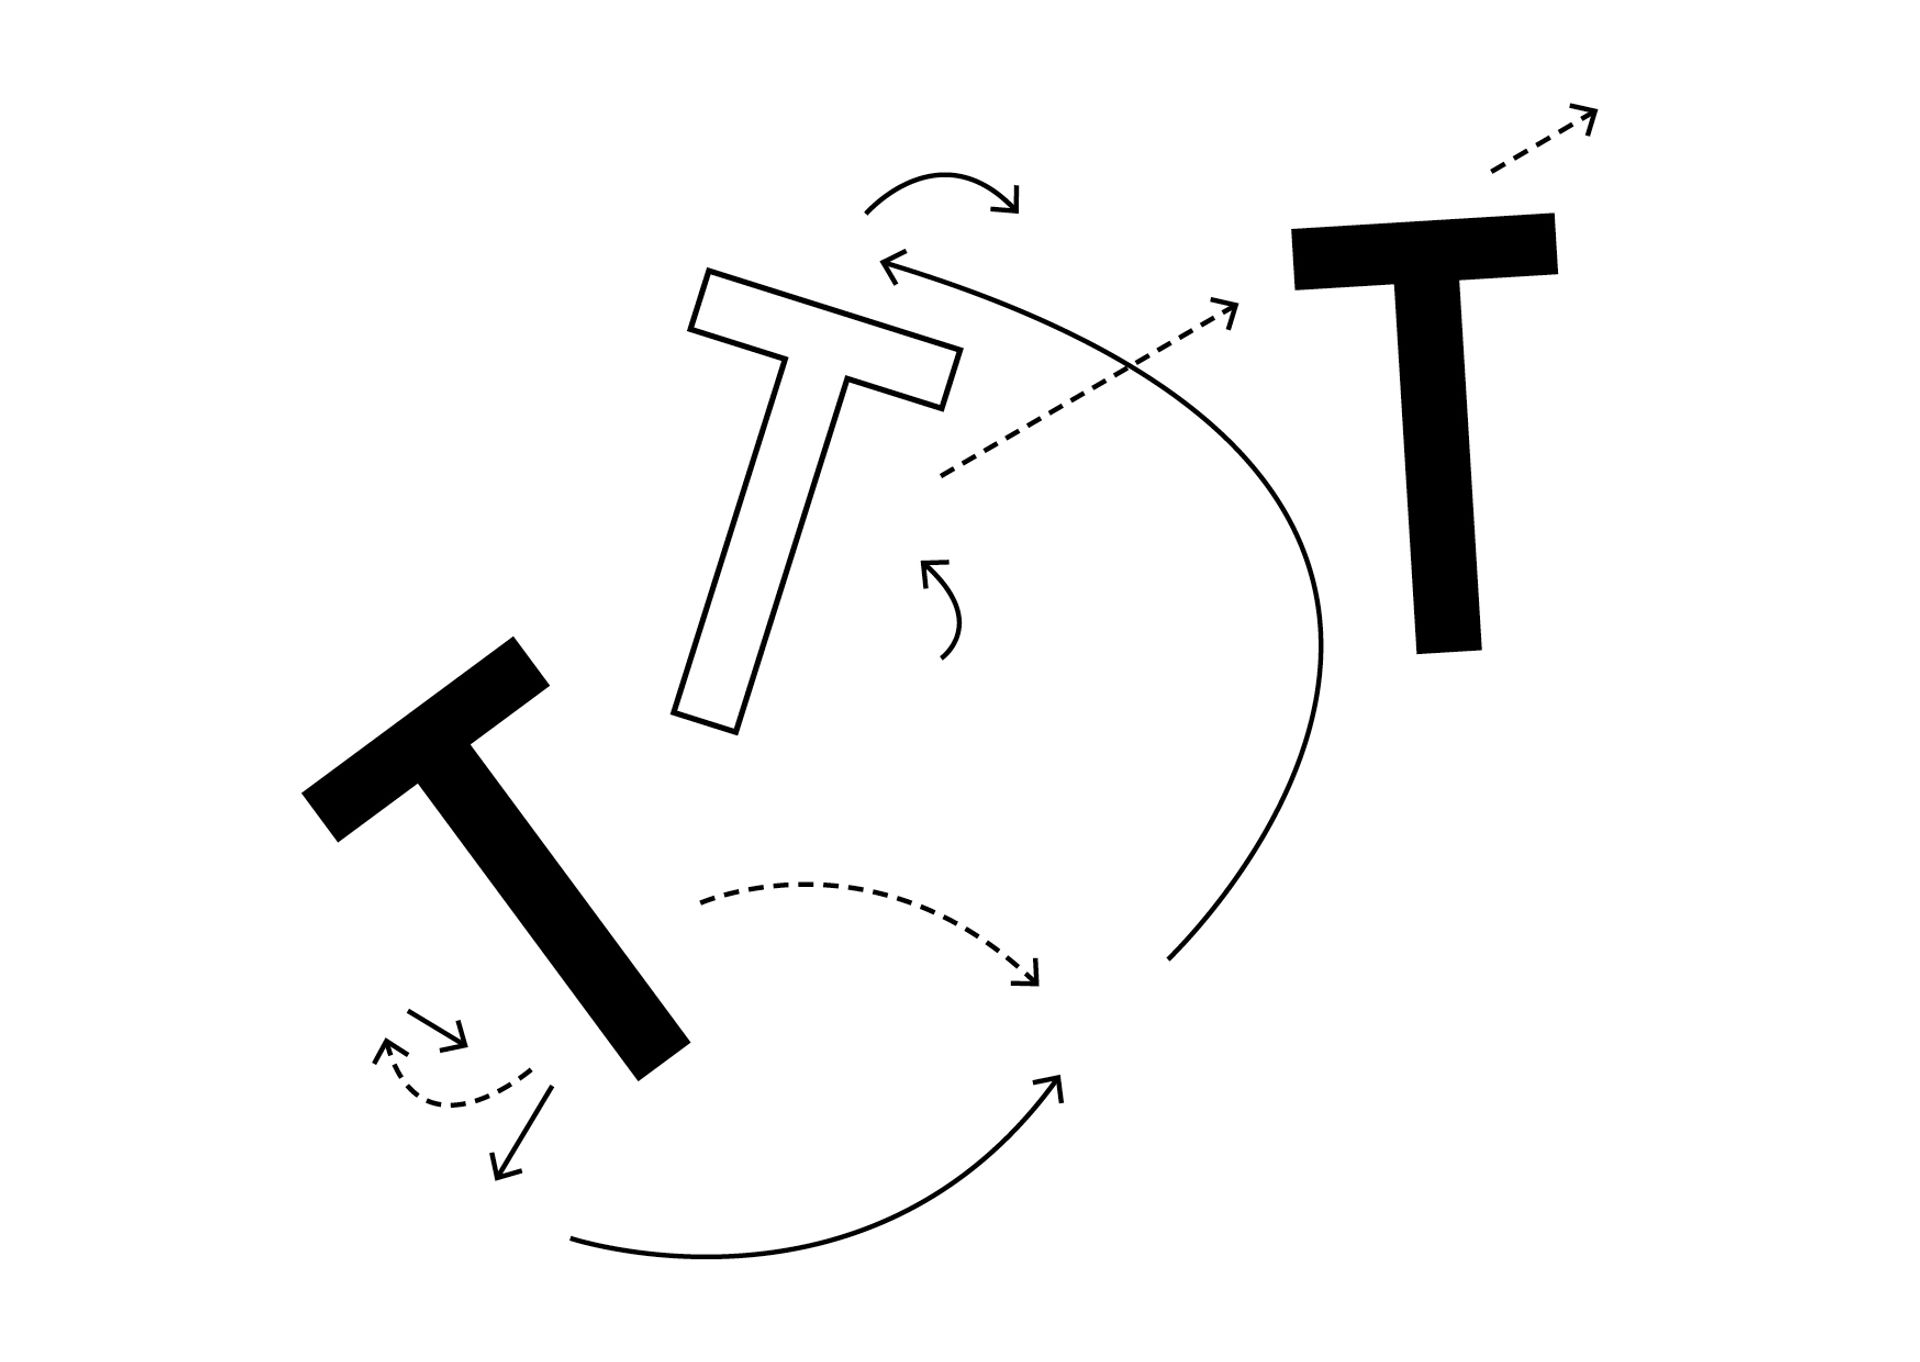 Original design for “Two To Tango” by PARAT.cc, 2017